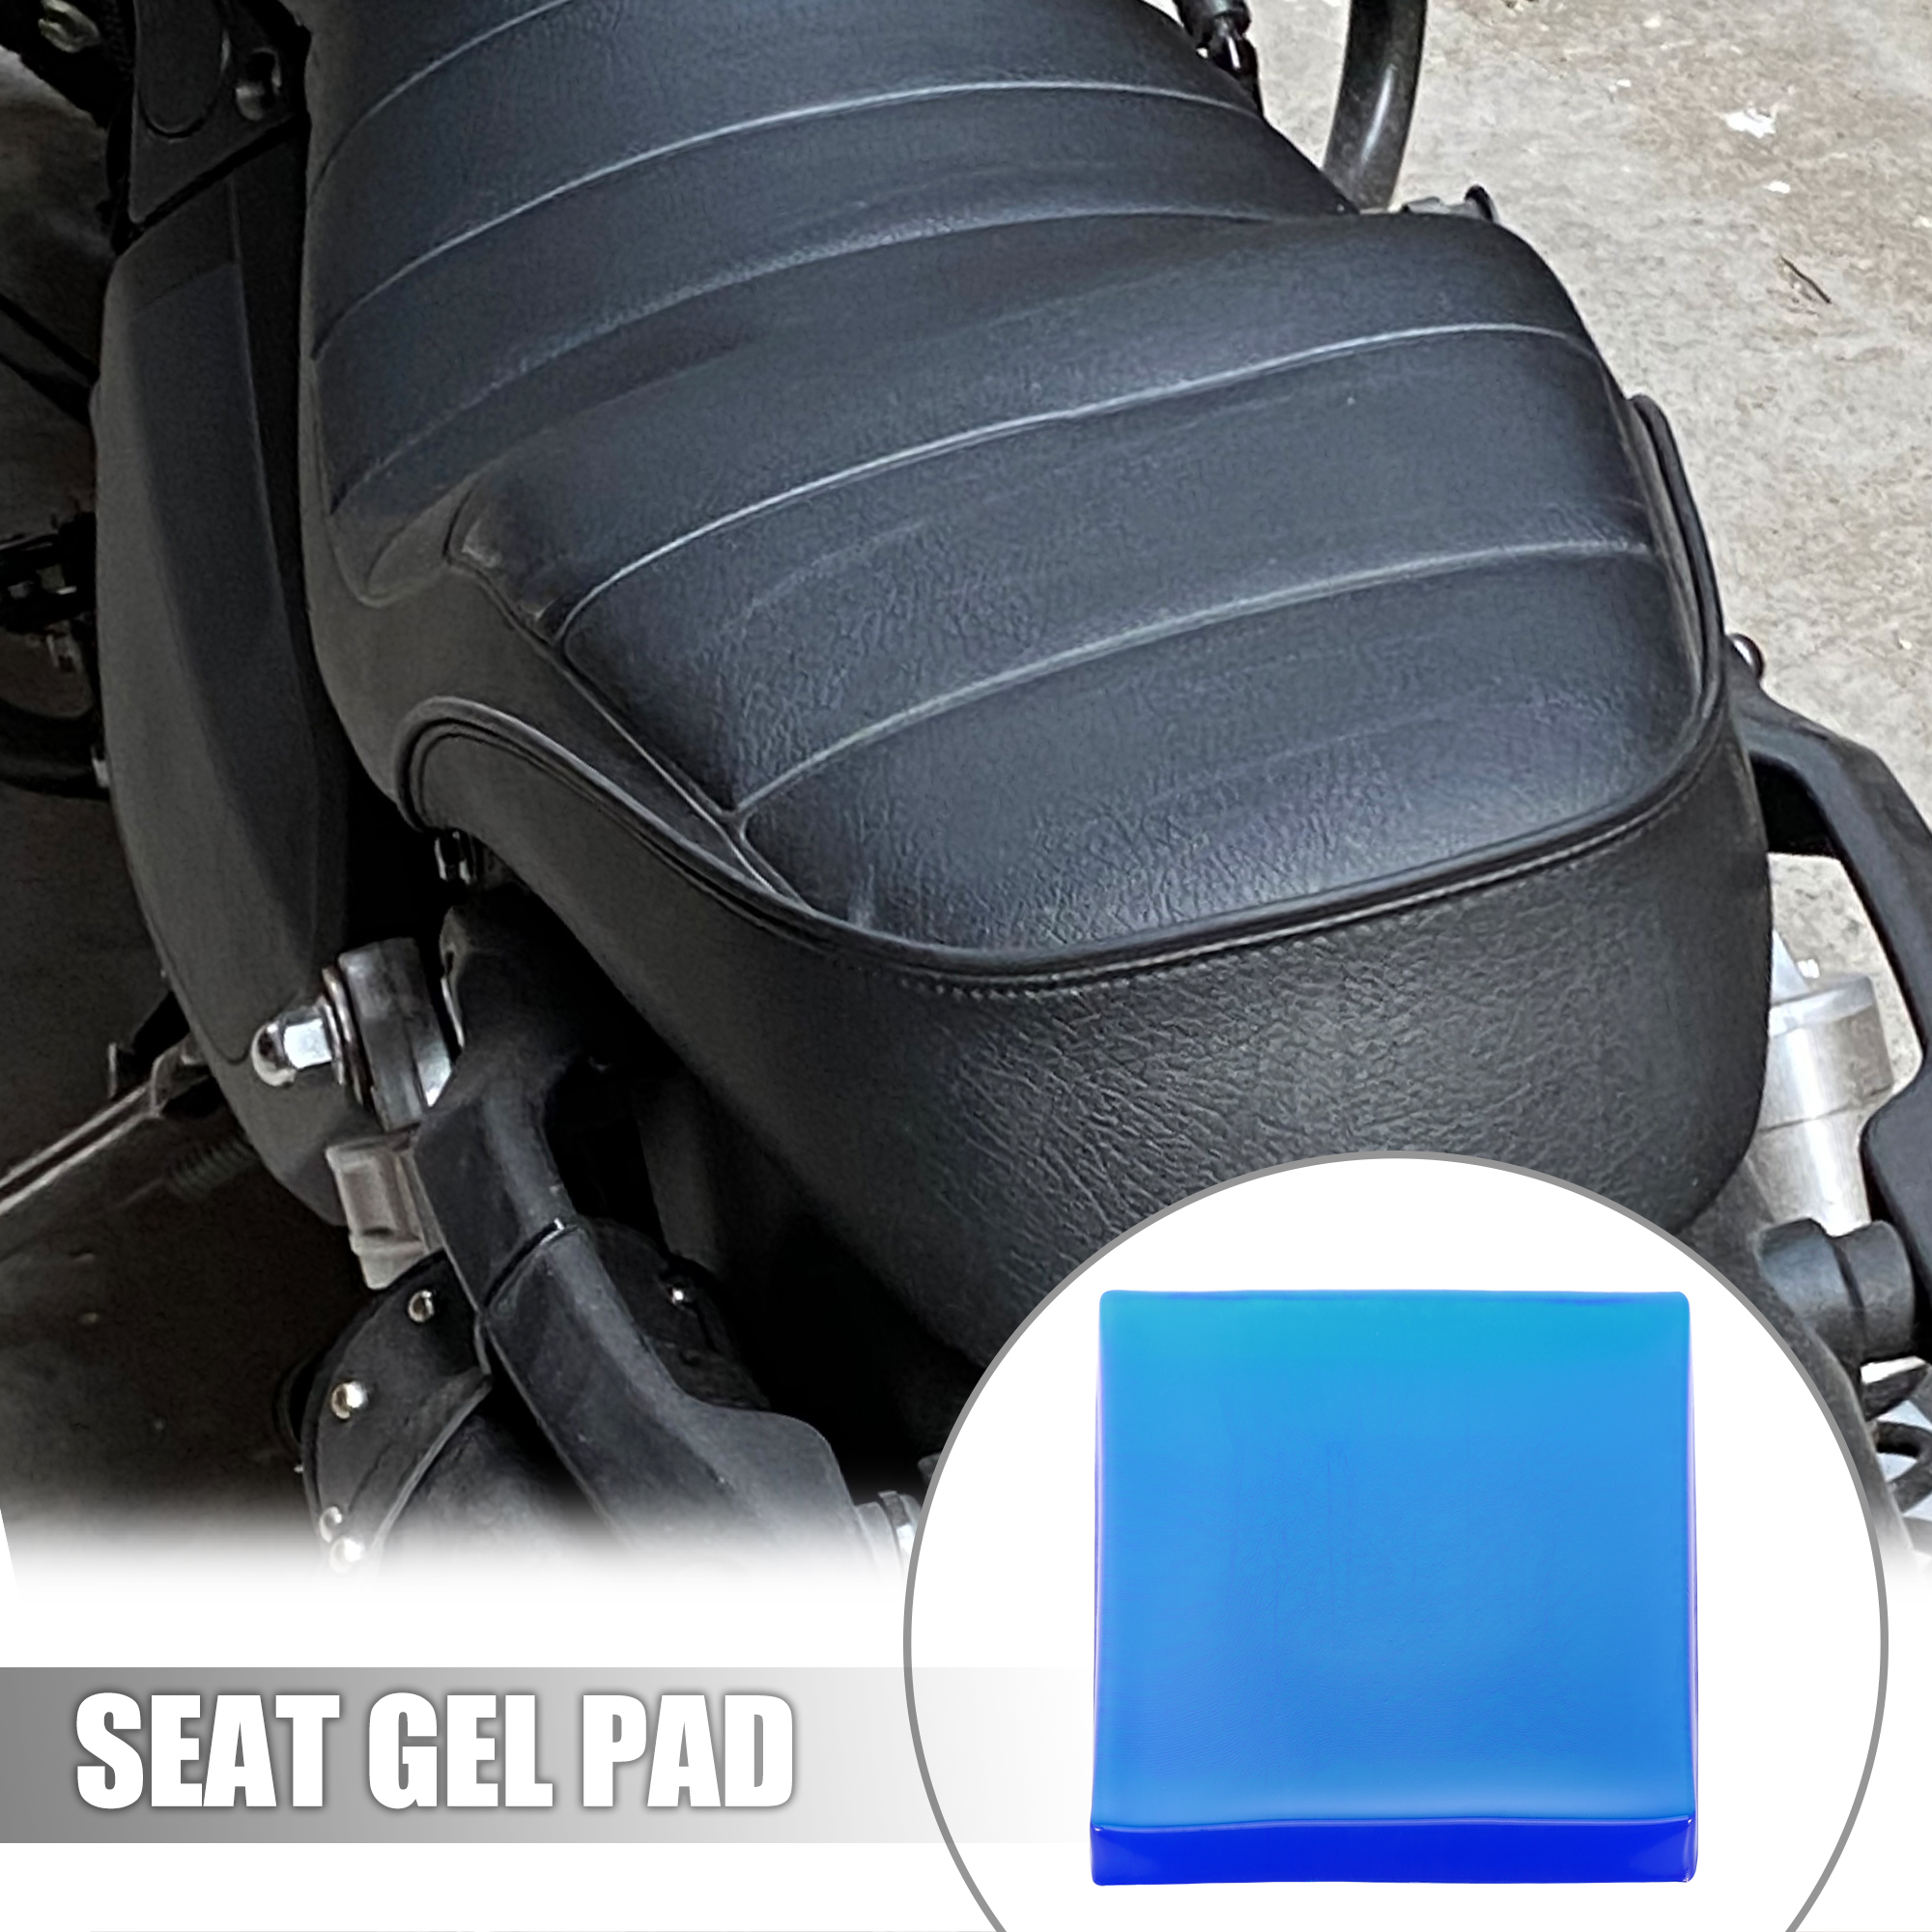 Unique Bargains 25x25x2cm Motorcycle Seat Gel Pad Shock Absorption Mat Comfortable Cushion Blue